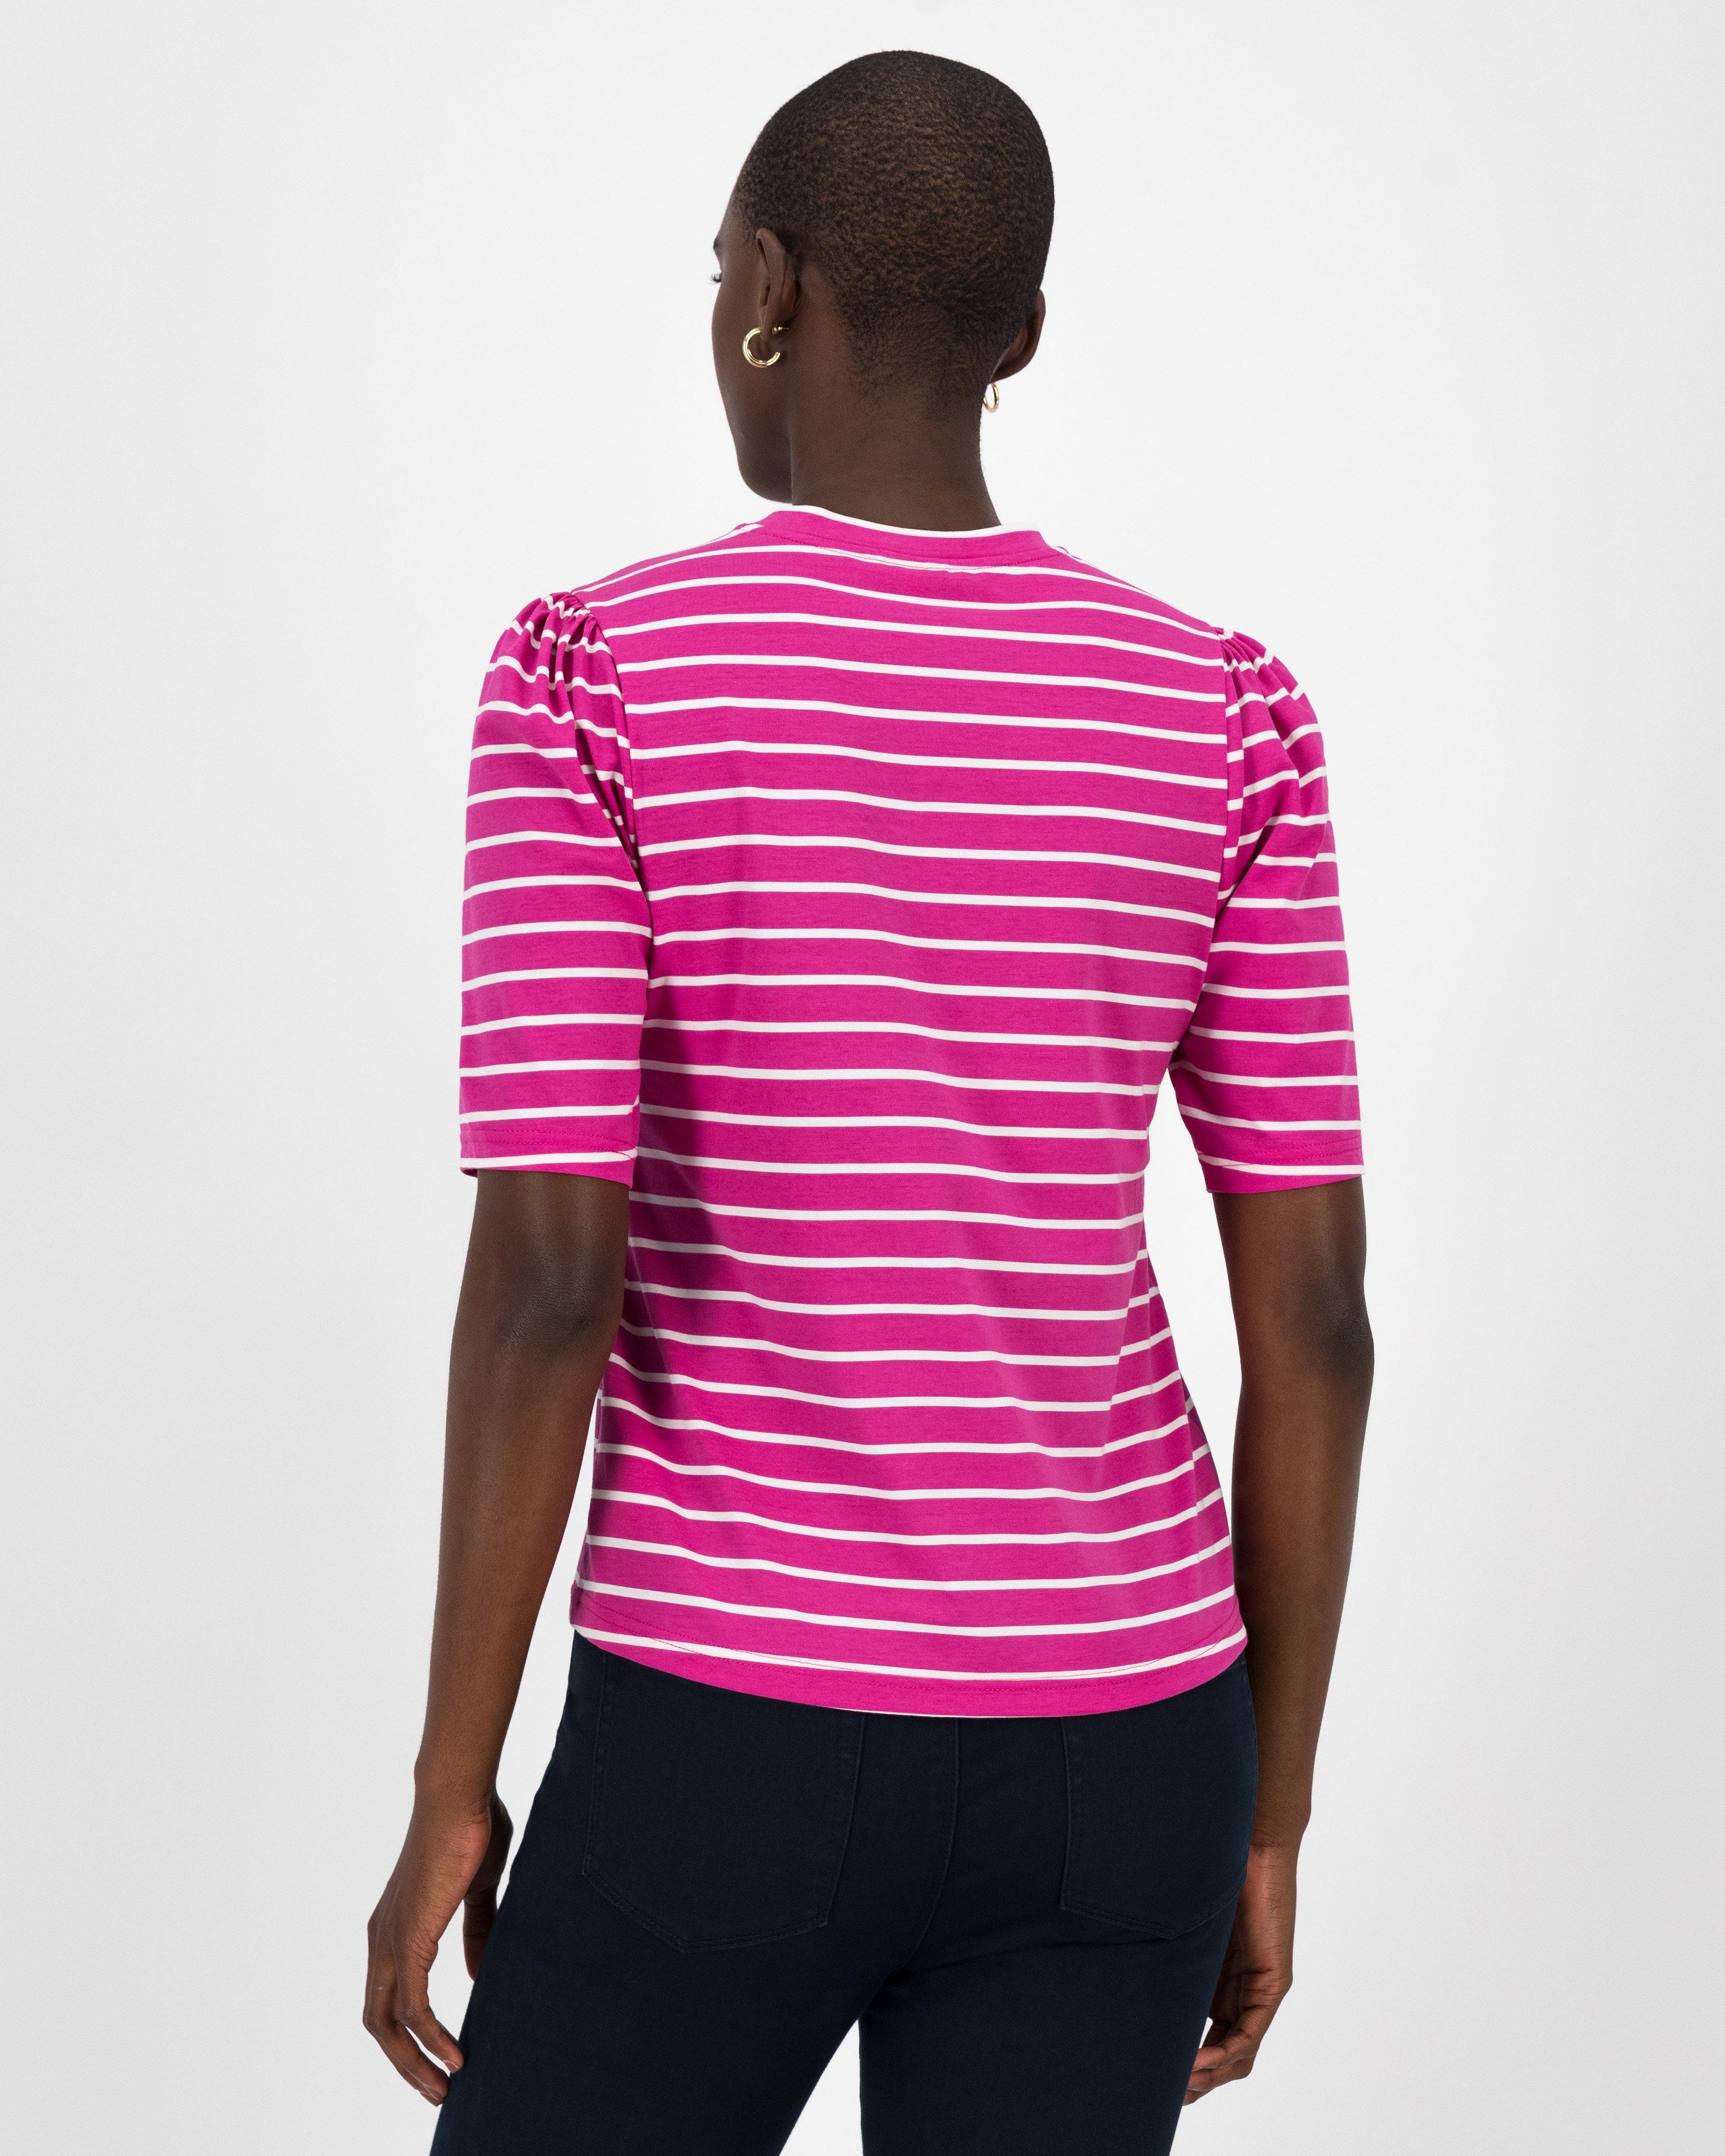 Danica Striped Short Sleeve Top -  Pink